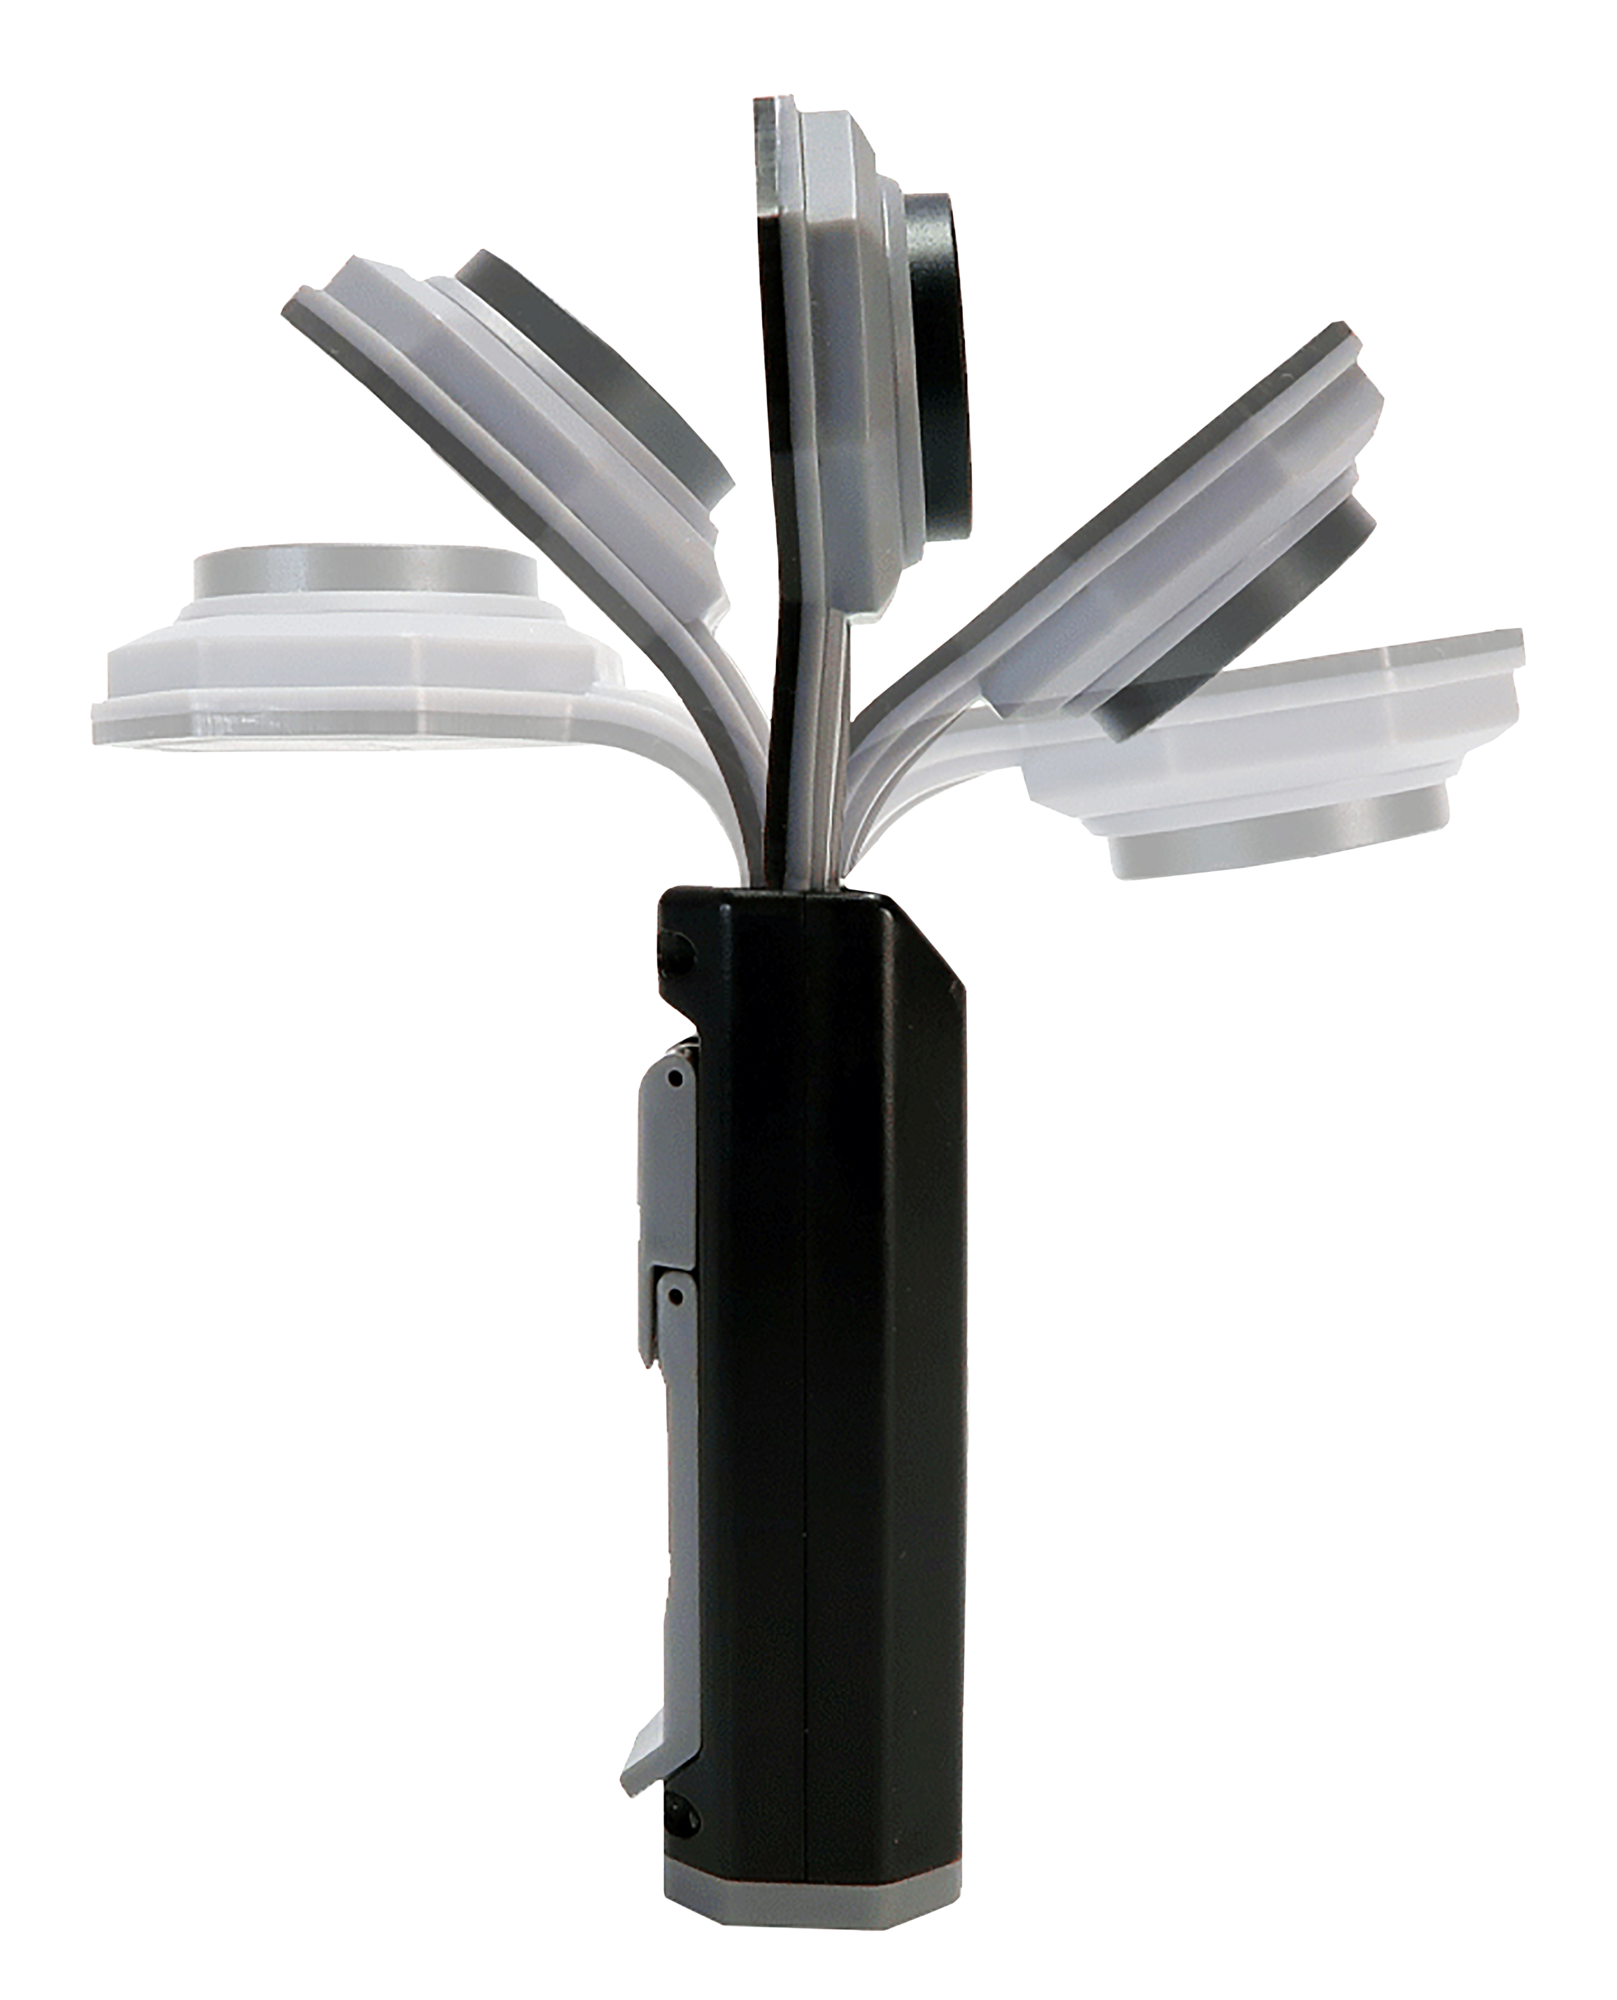 LED flashlight "Flexit" with UV light